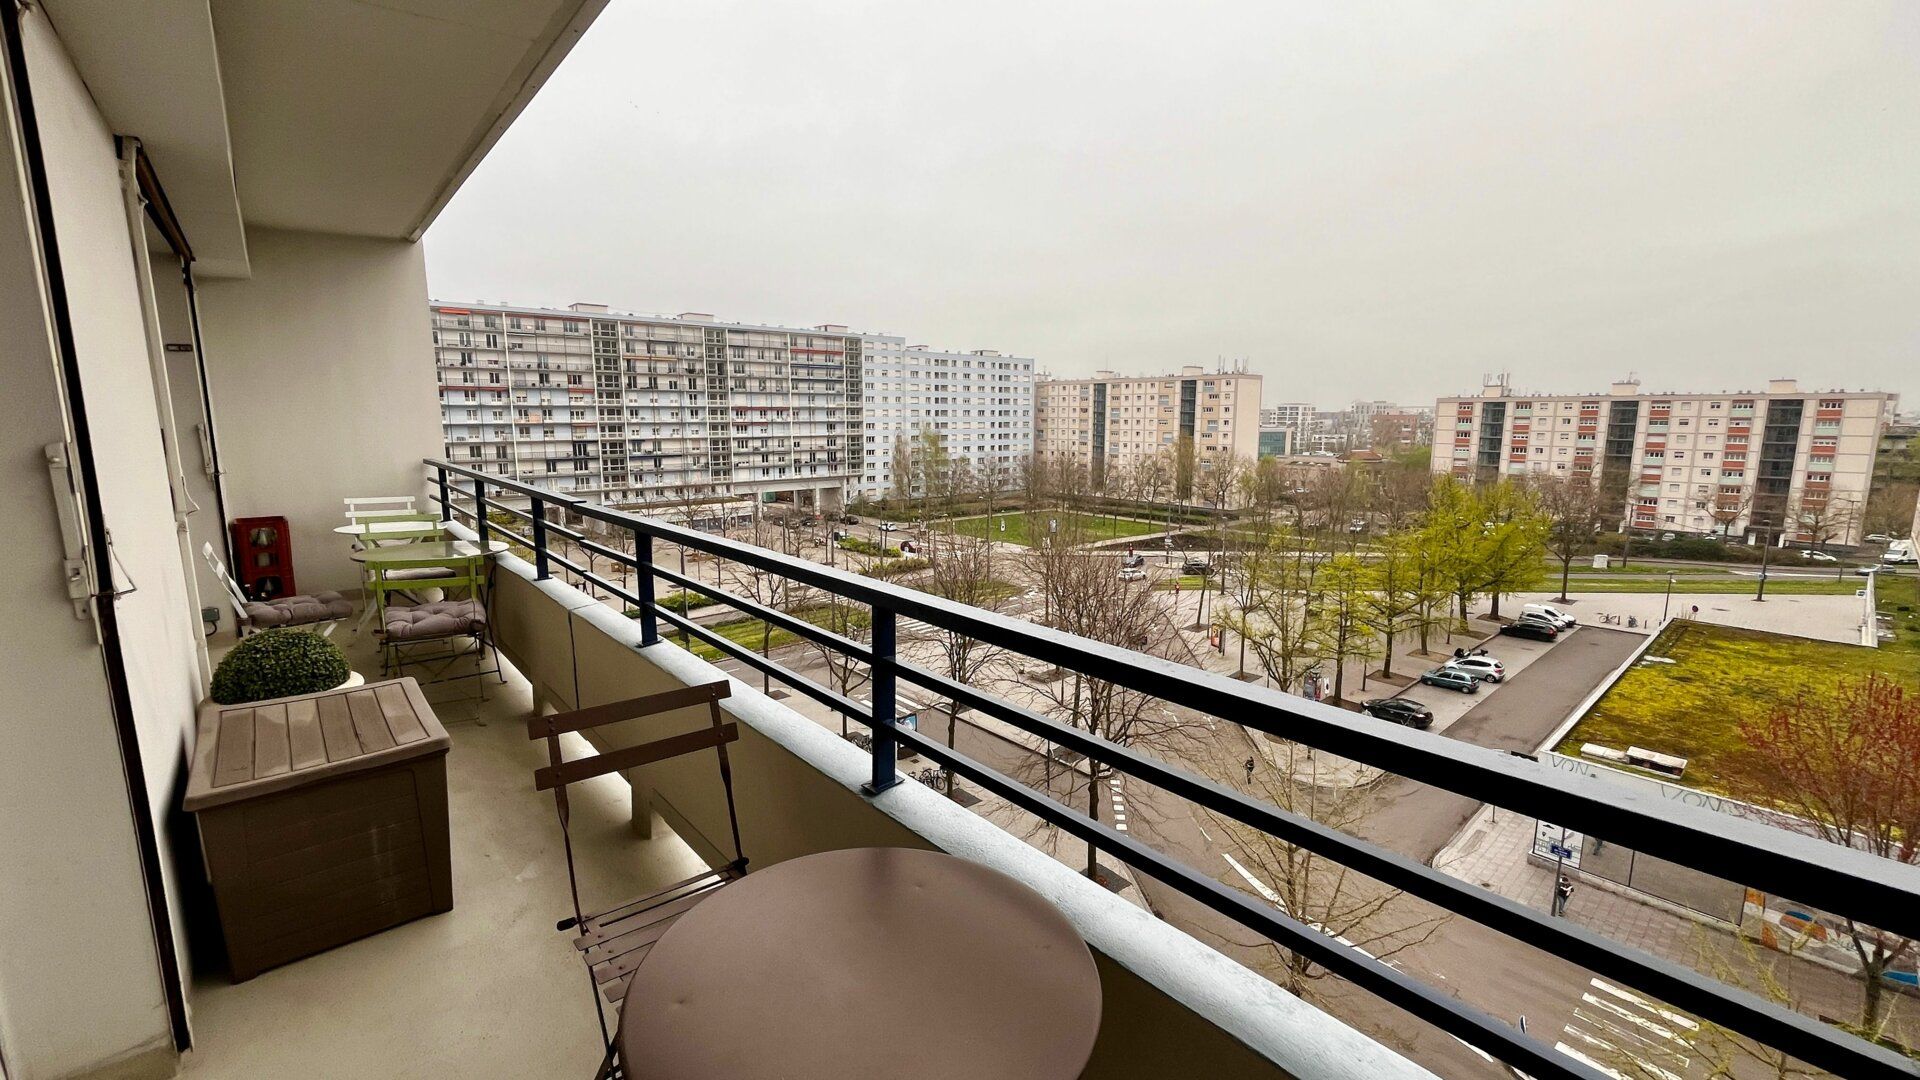 Appartement à vendre 4 94.63m2 à Strasbourg vignette-11